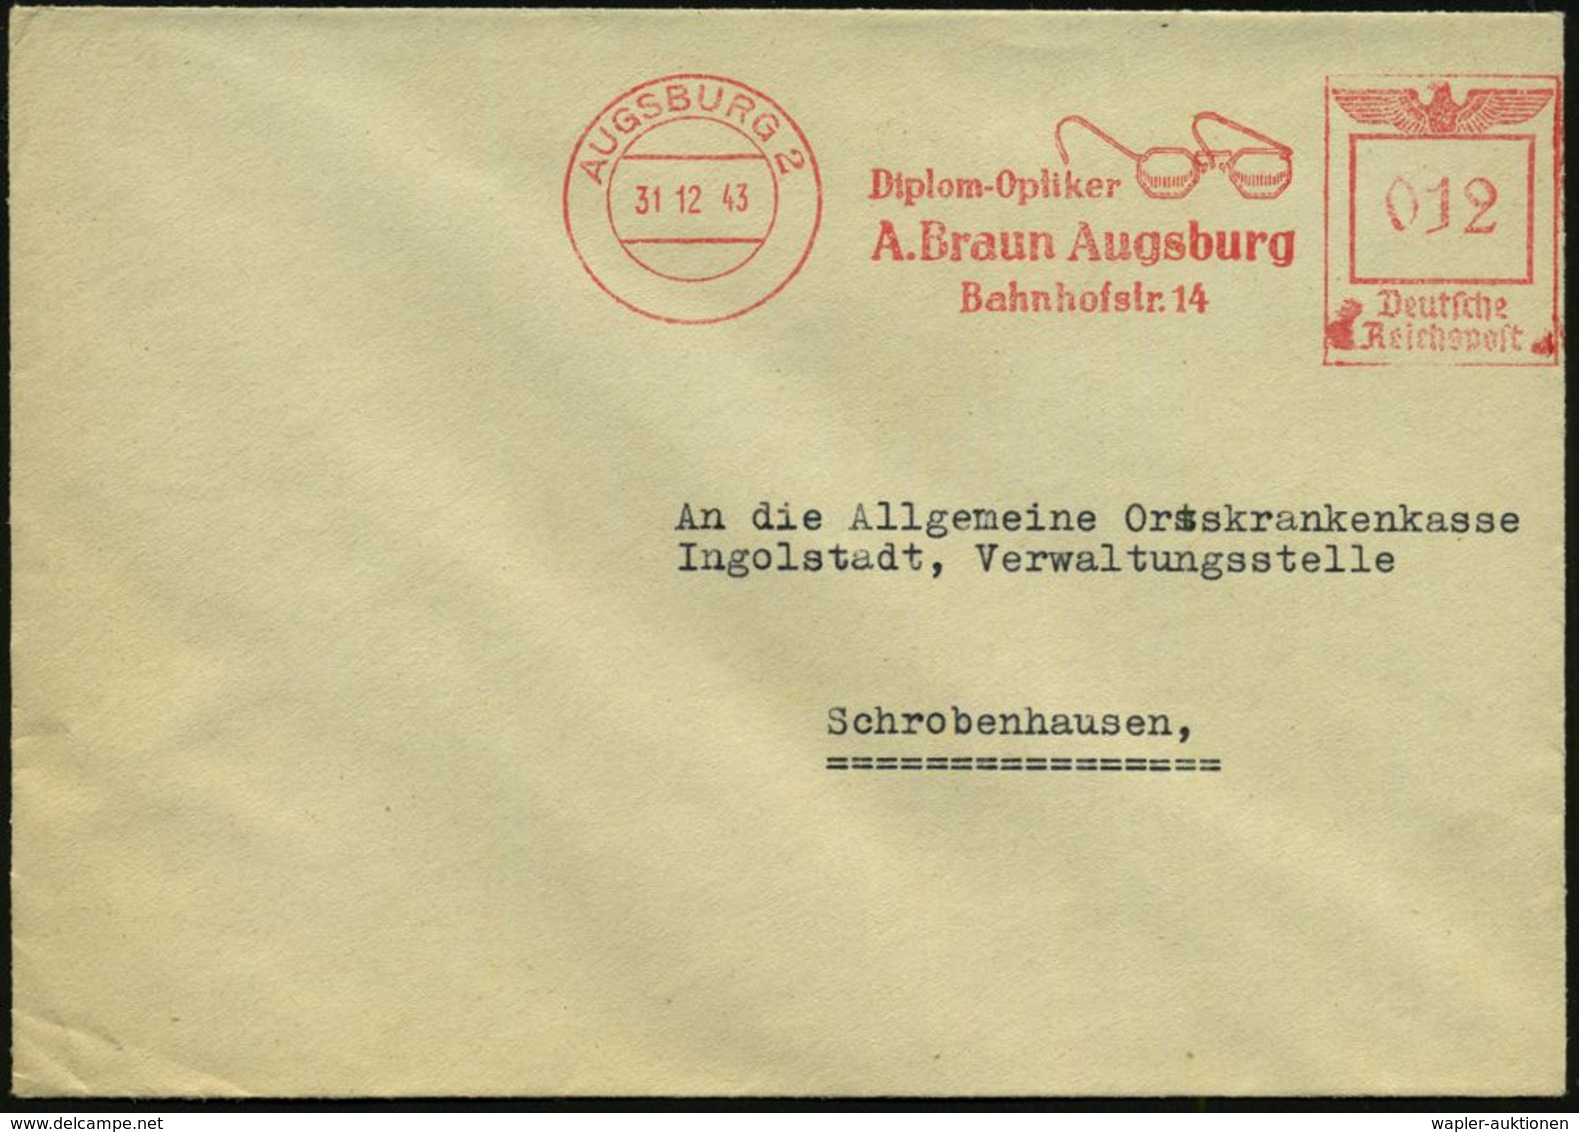 AUGE / OPHTALMOLOGIE / BLINDHEIT : AUGSBURG 2/ Diplom-Optiker/ A.Braun.. 1943 (31.12.) AFS = Brille (rs. Abs.-Vordr.) Kl - Disease